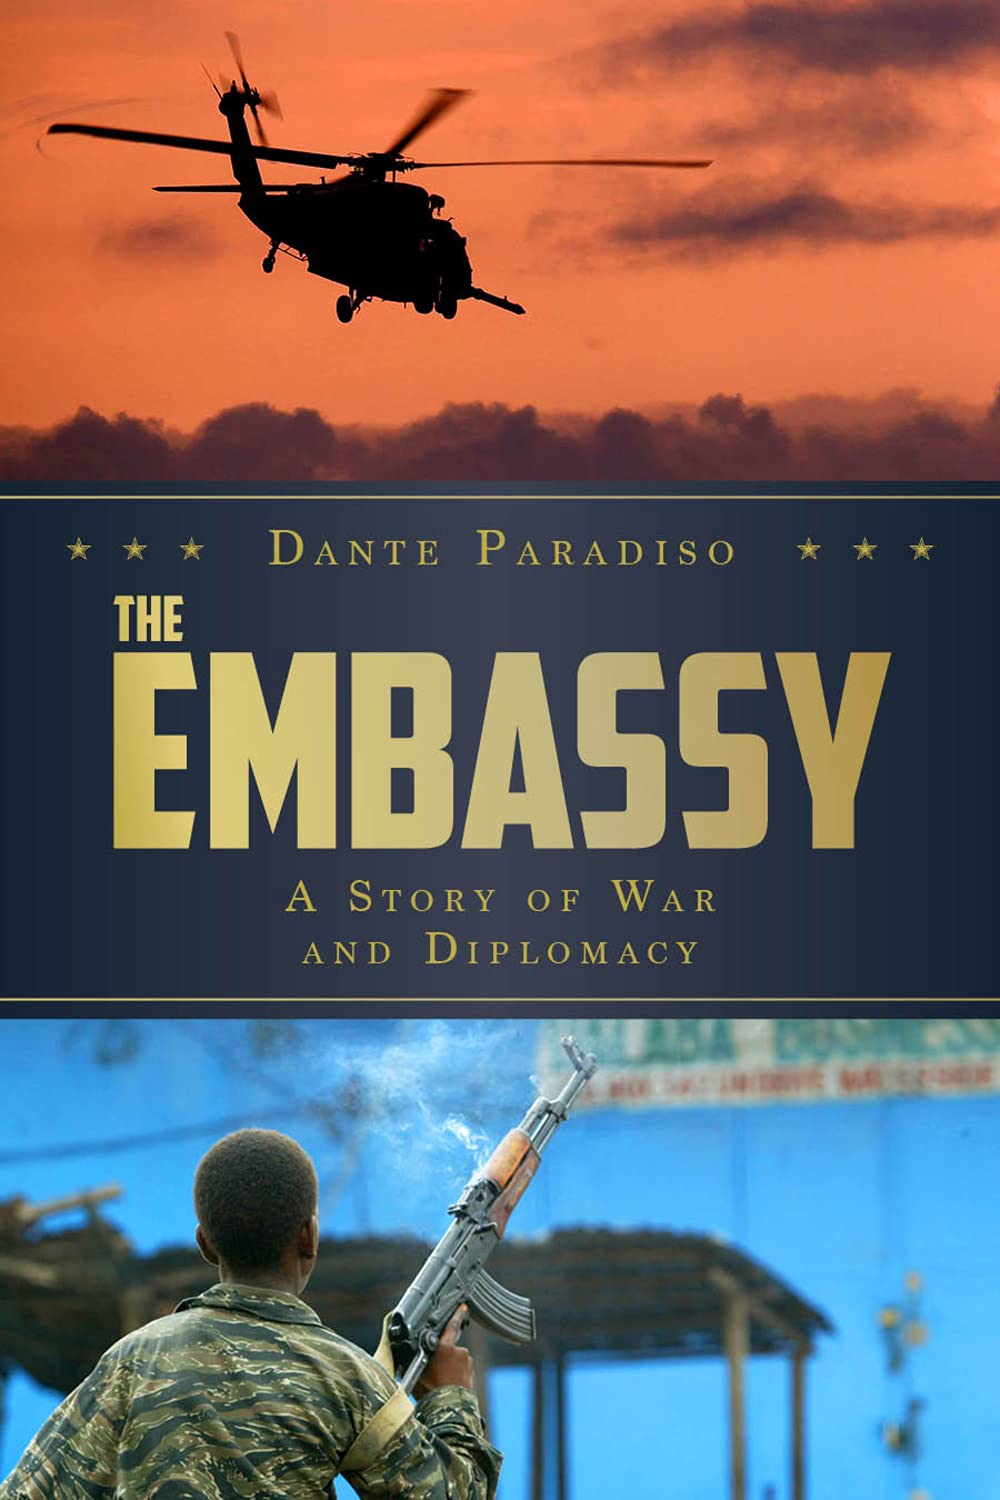 ambassador, The Embassy: A Story of War and Diplomacy